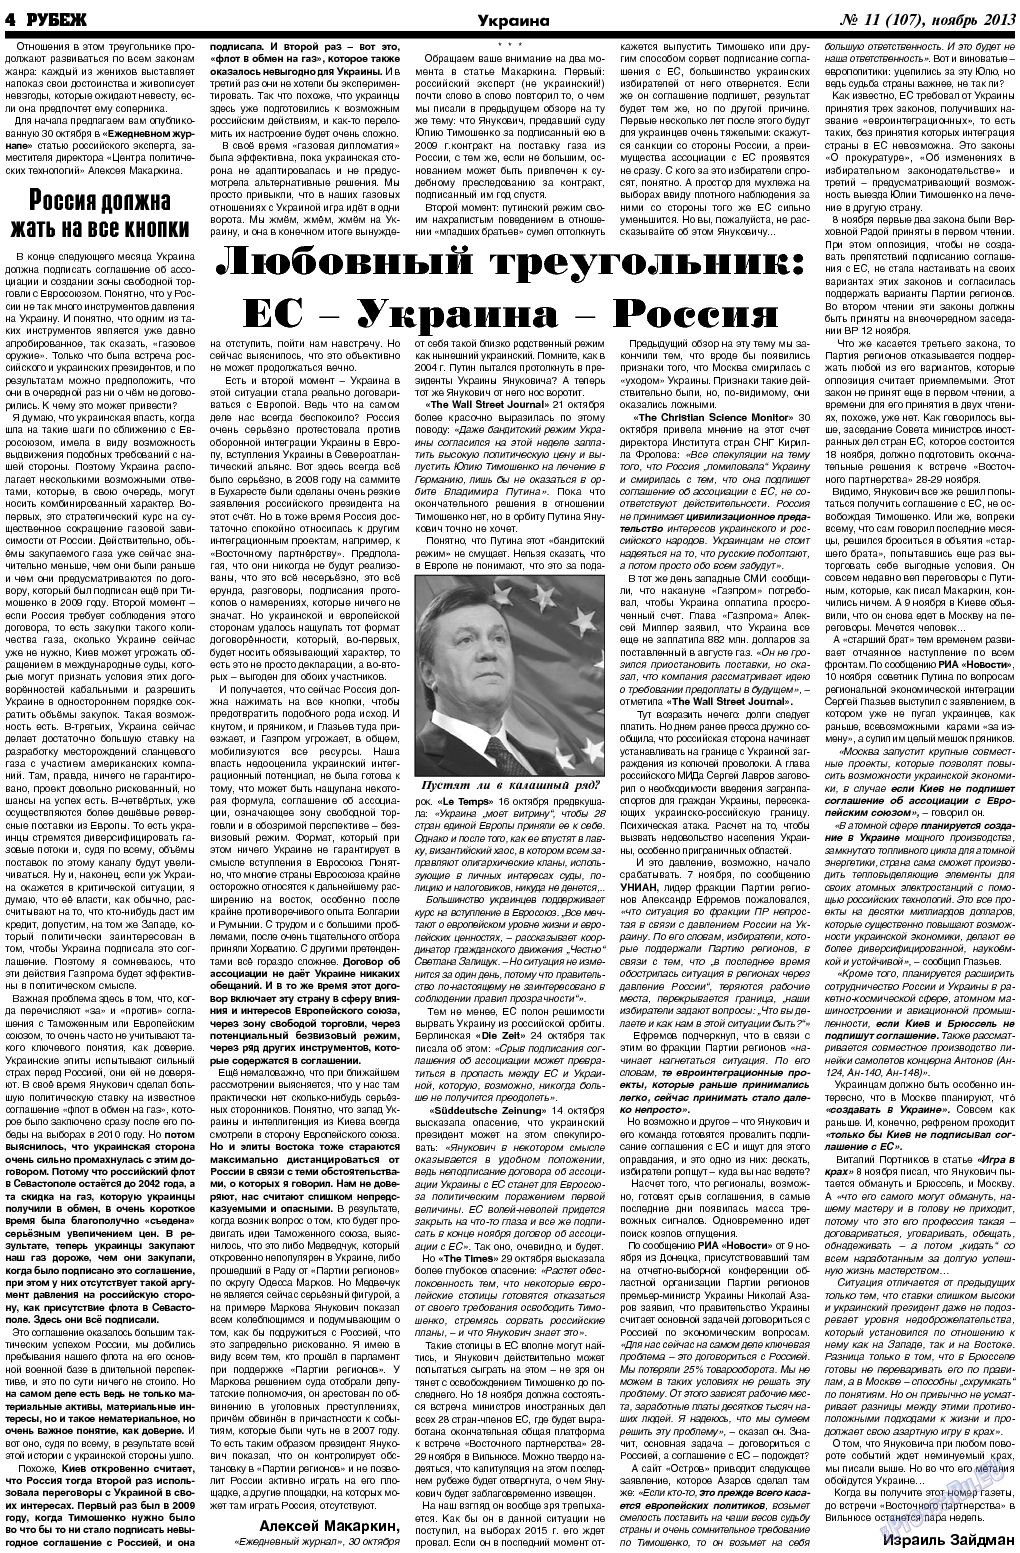 Рубеж, газета. 2013 №11 стр.4